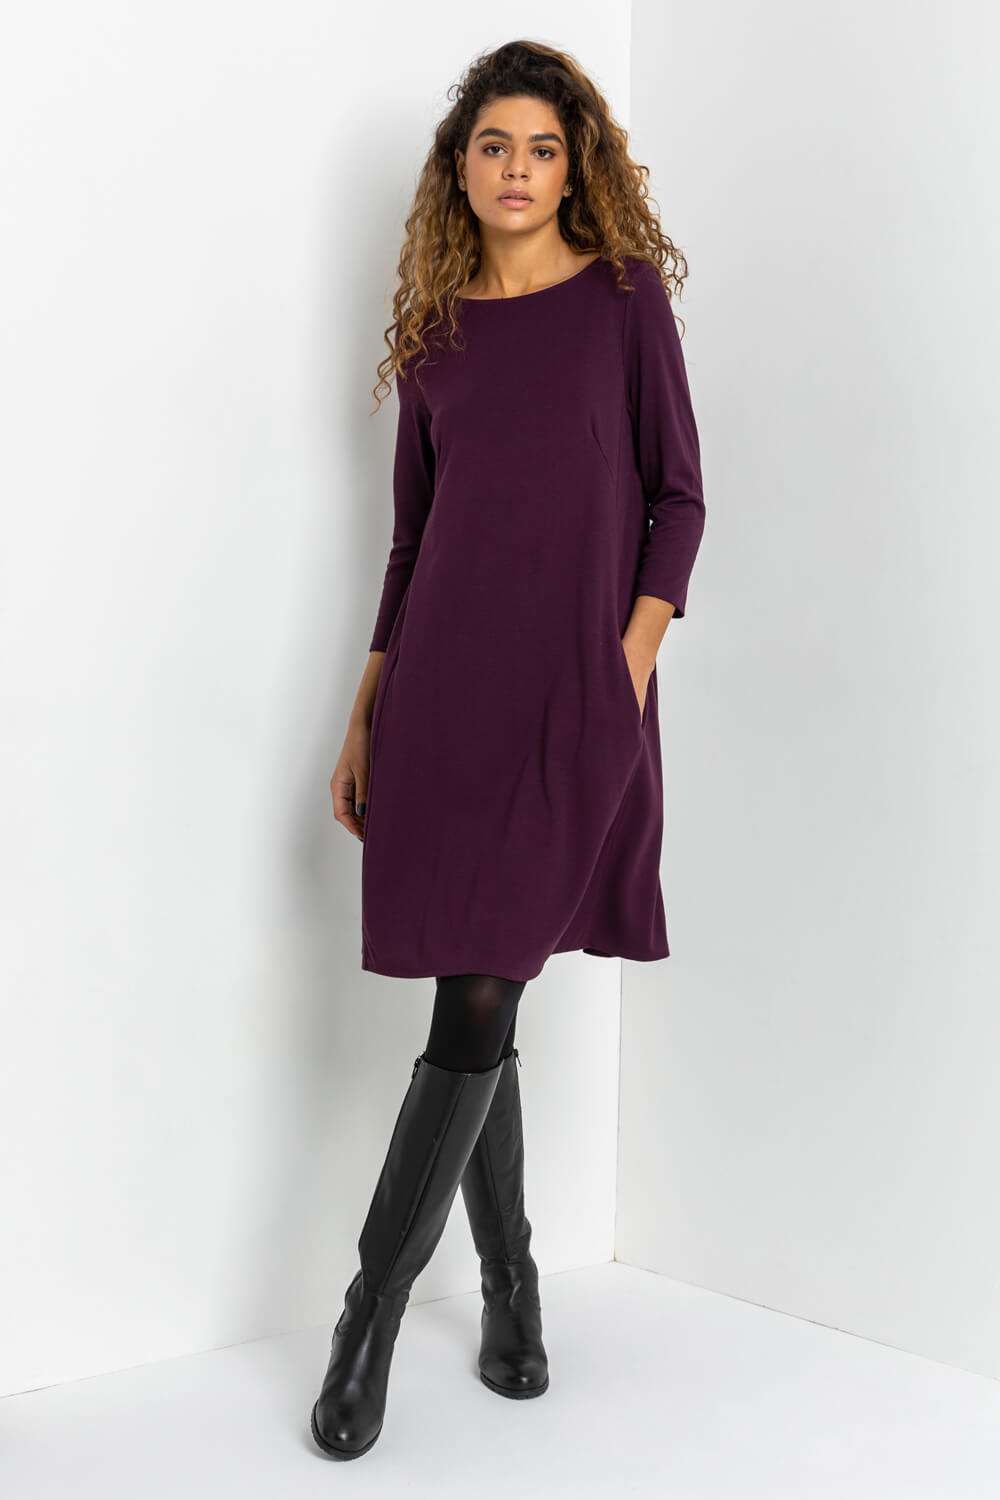 Purple A-Line Pocket Detail Swing Dress, Image 1 of 4